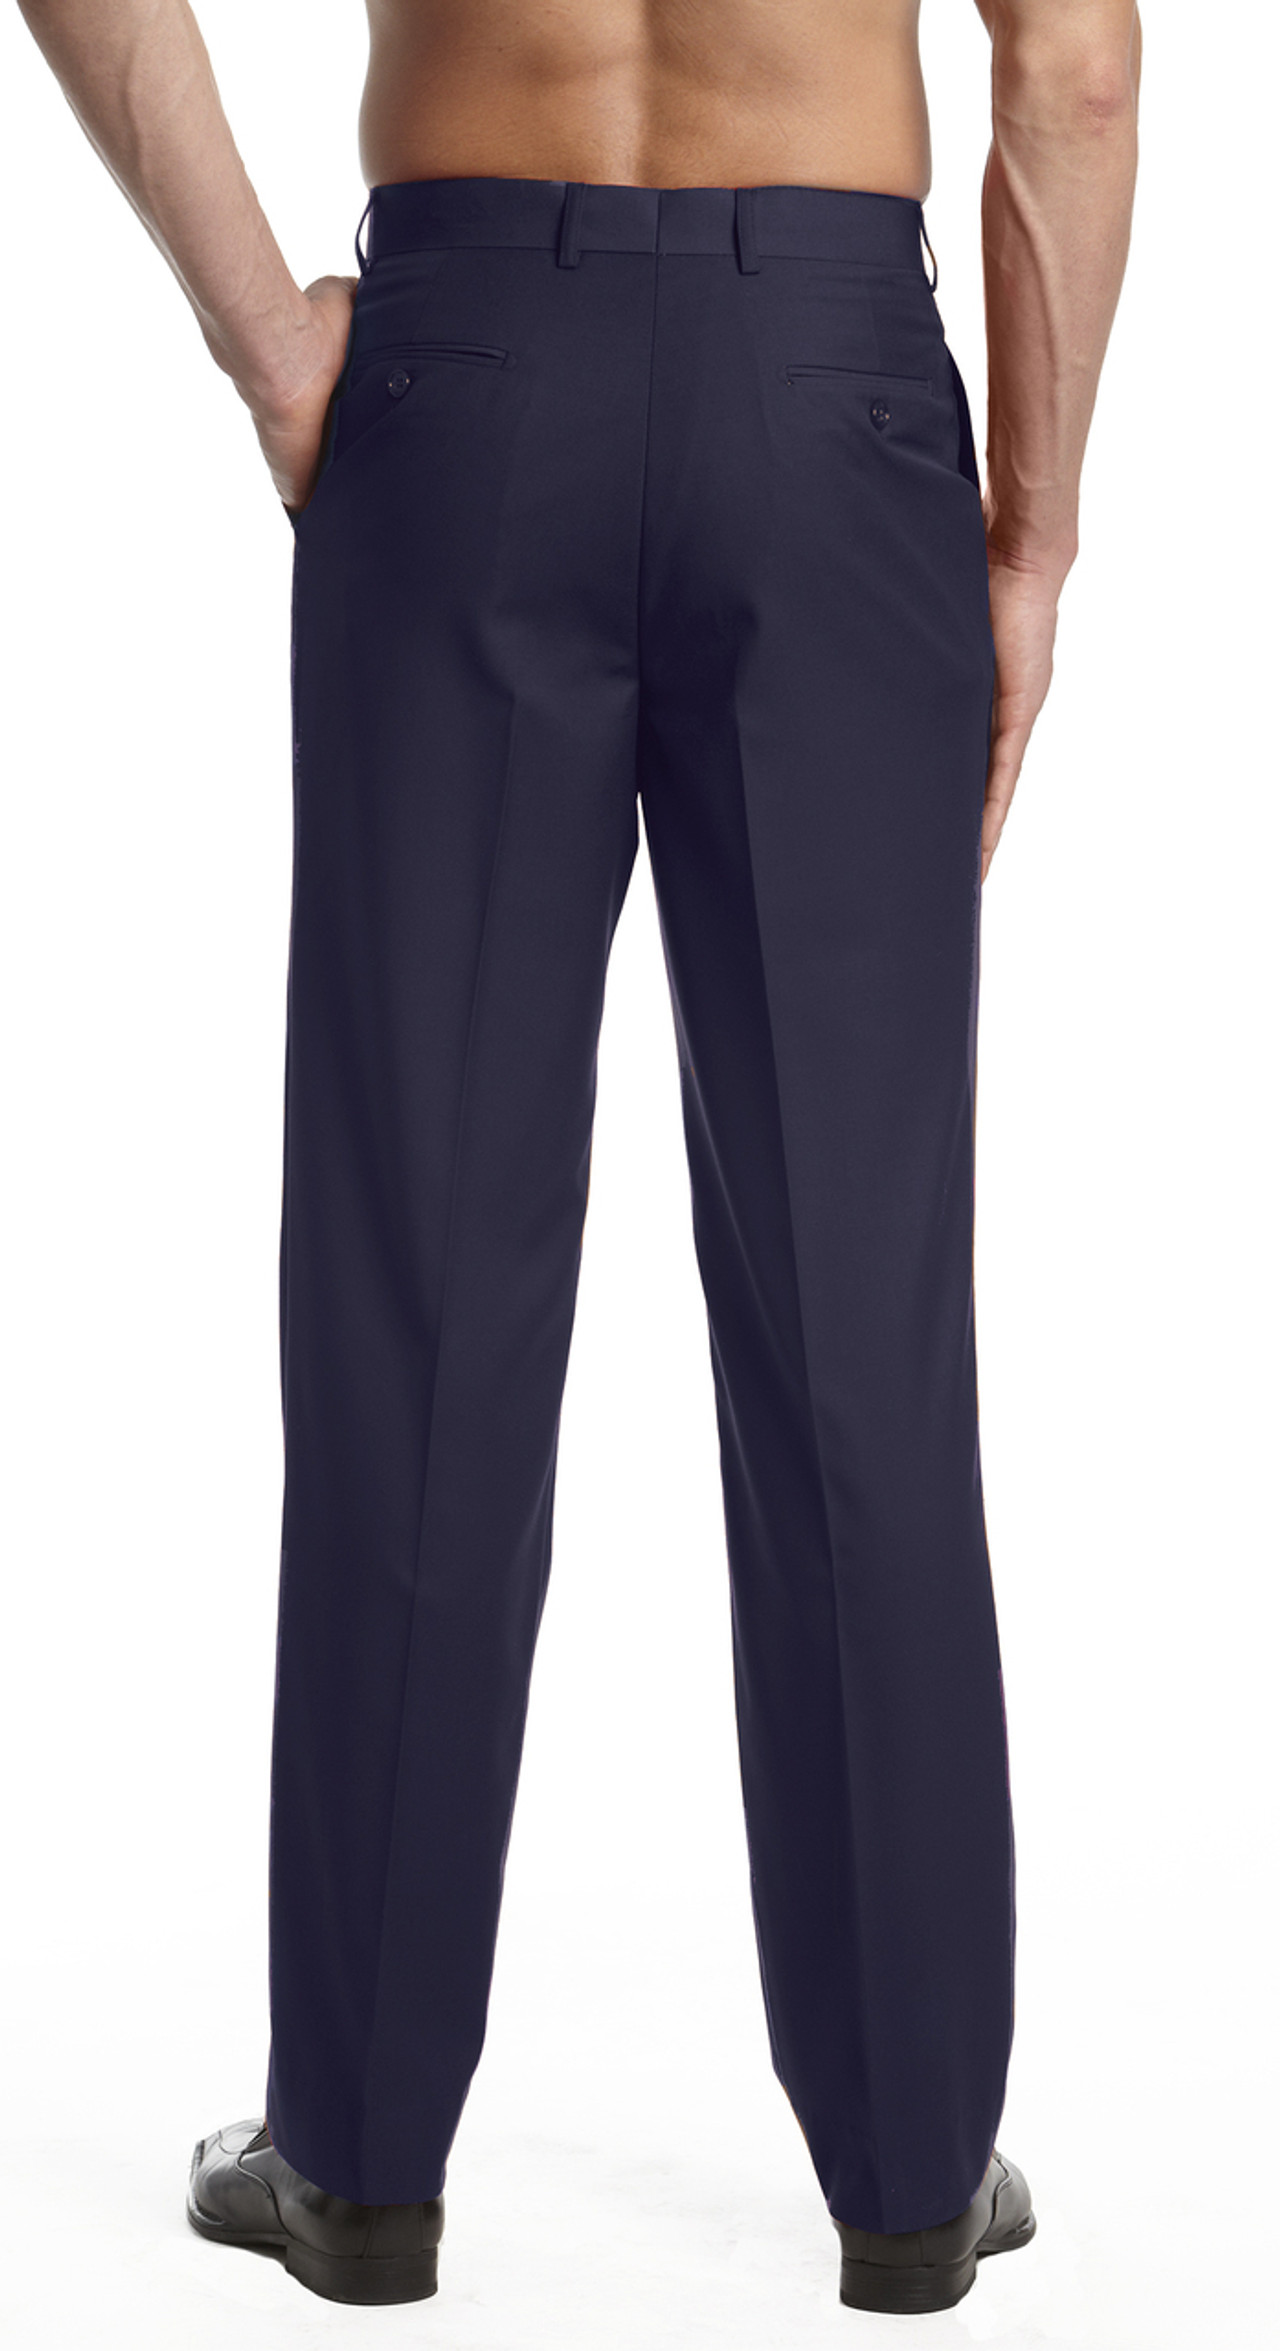 Men's Navy Blue Pants | Concitor Dark Blue Trousers